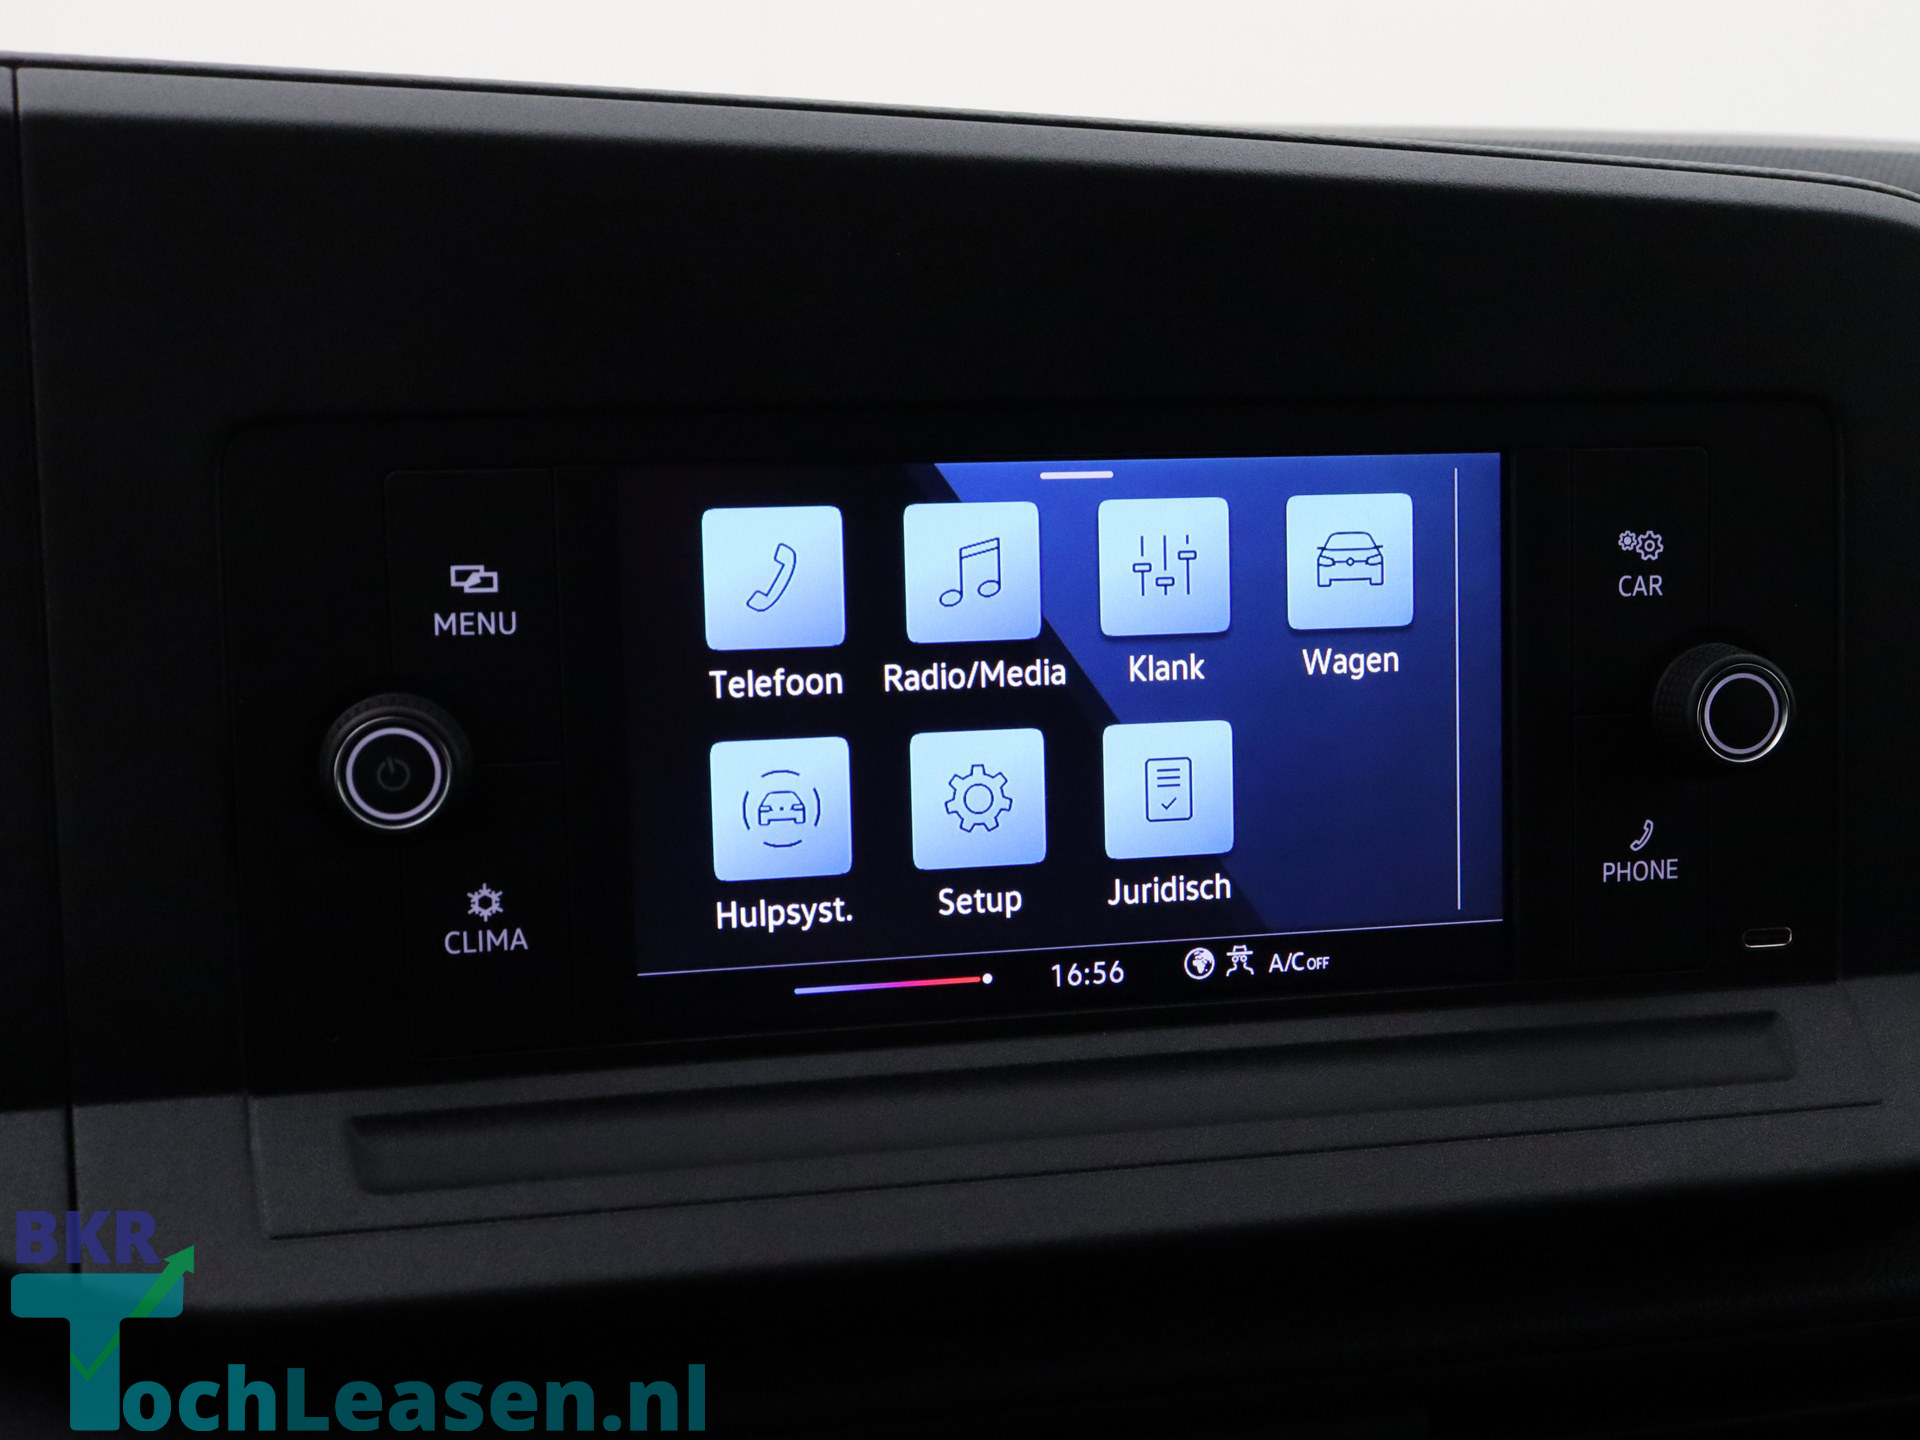 BKR toch leasen - Volkswagen Caddy - Grijs 7